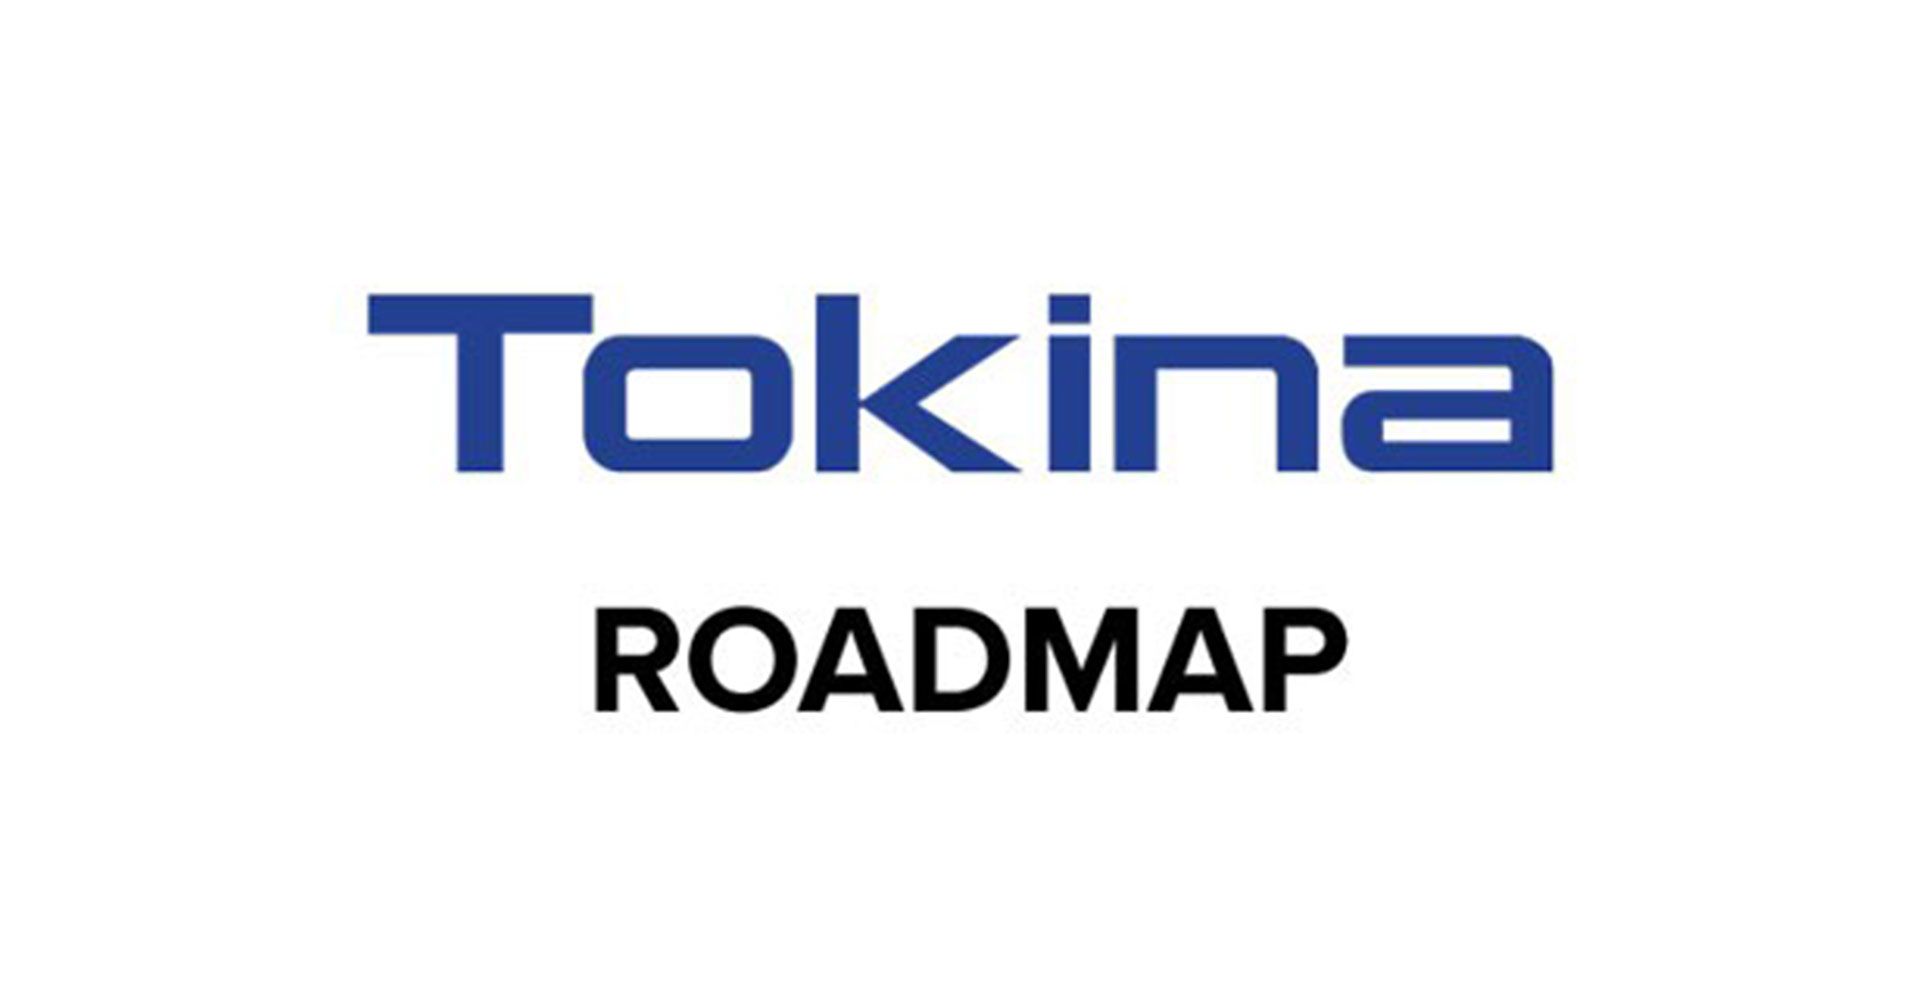 Tokina อัปเดต roadmap เลนส์ล่าสุด เตรียมเปิดตัวเพิ่มอีก 7 รุ่น ในปี 2021 นี้!